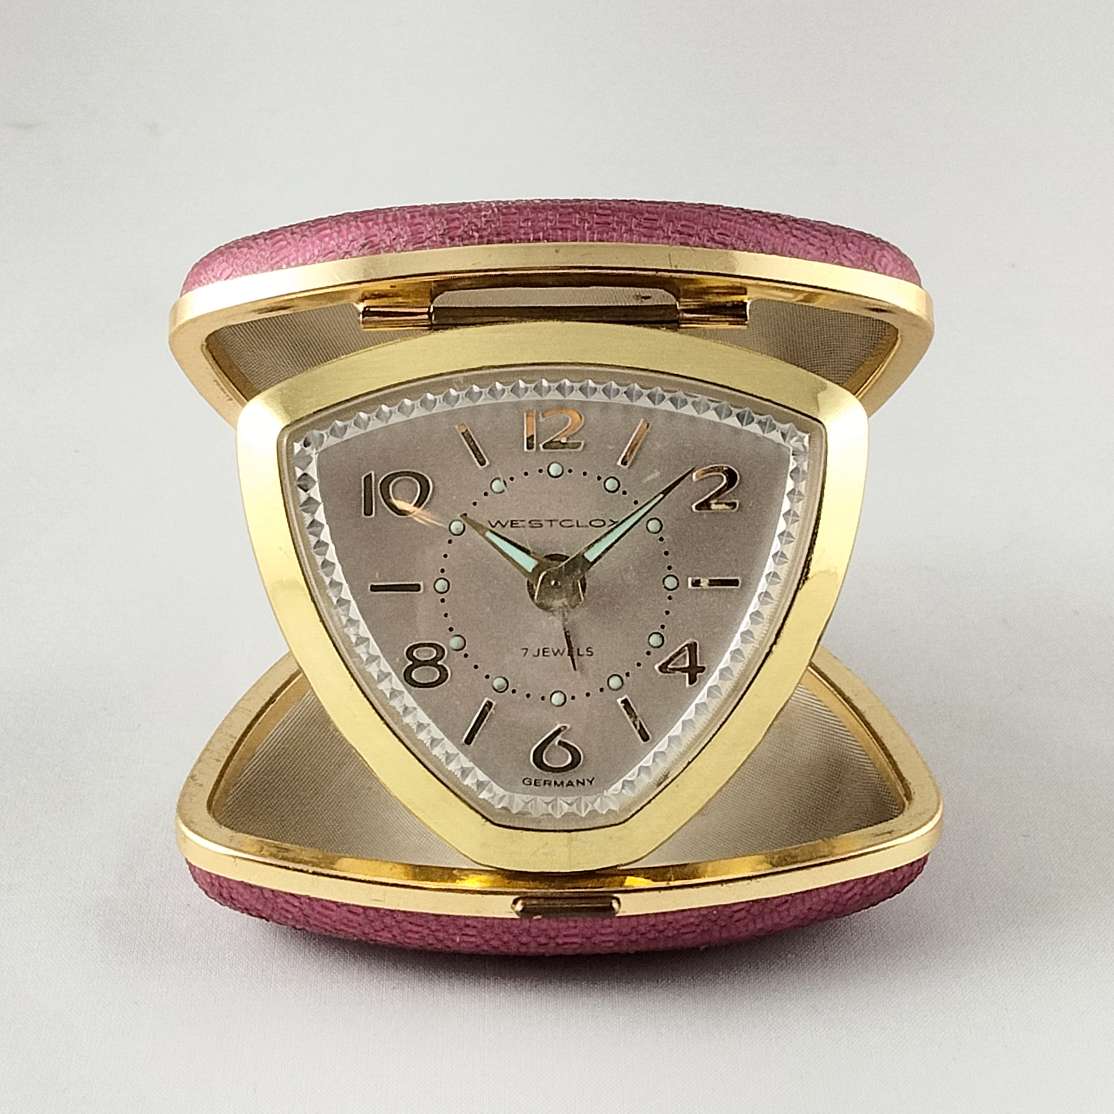 Westclox 7 Jewels Travel Clock, Pink Fabric Case